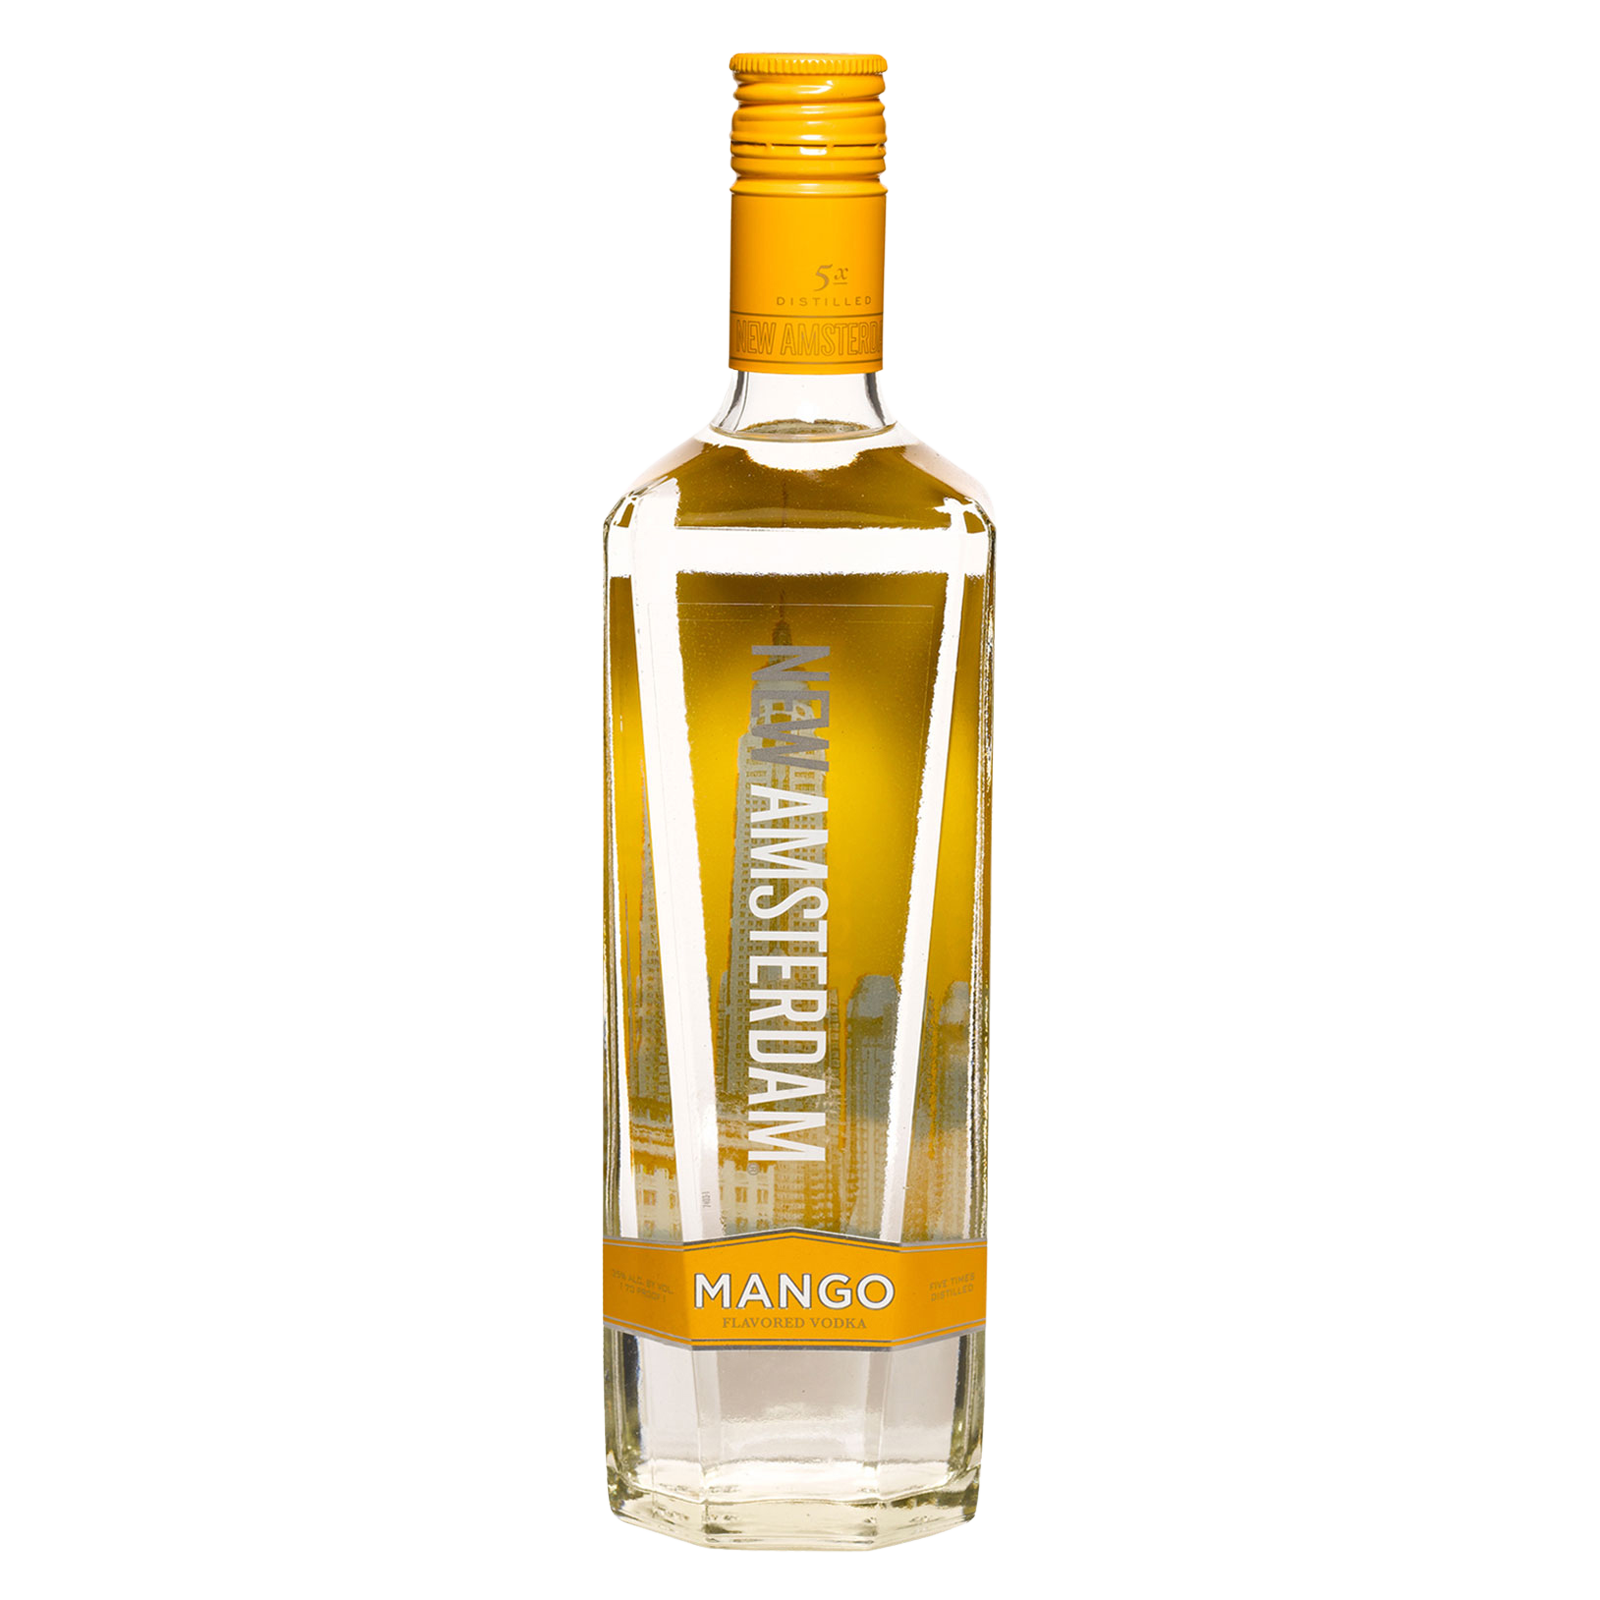 New Amsterdam Mango Vodka 750ml (70 Proof)